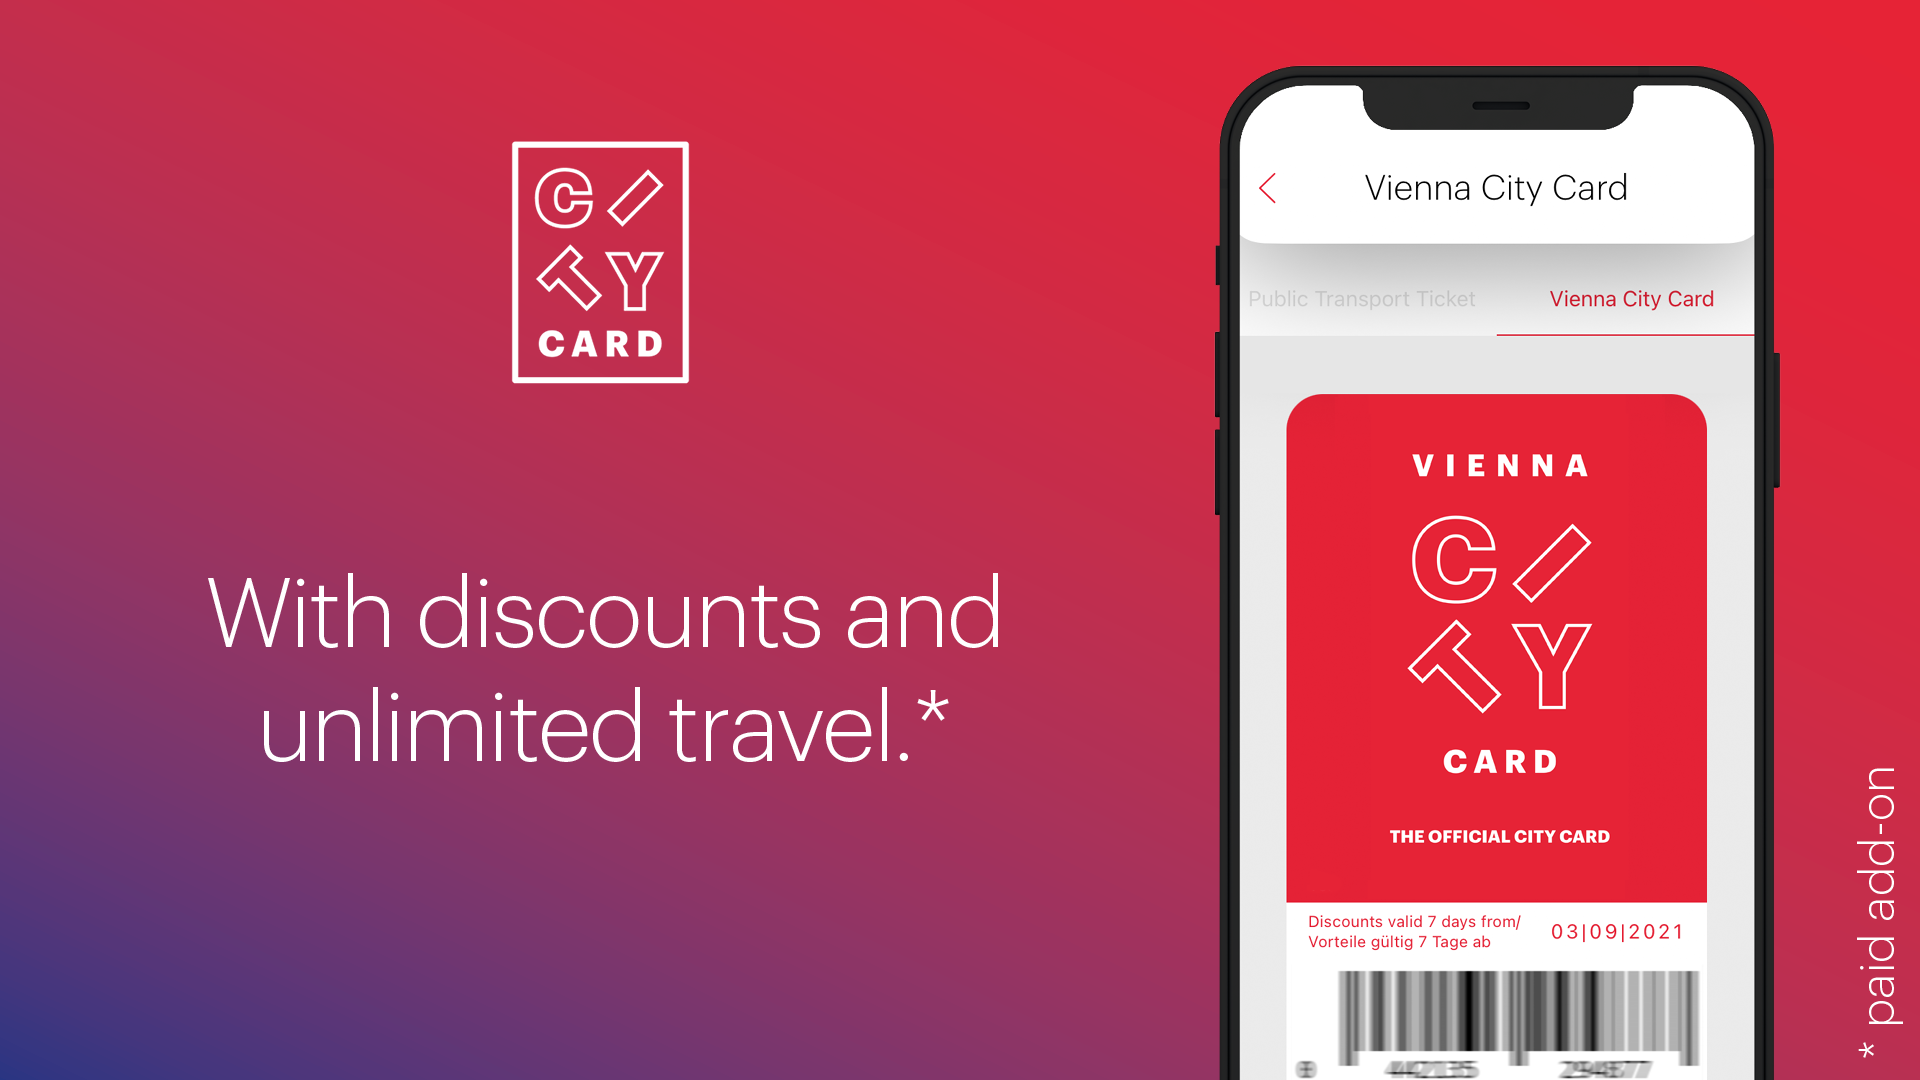 ivie City Guide App - Vienna City Card